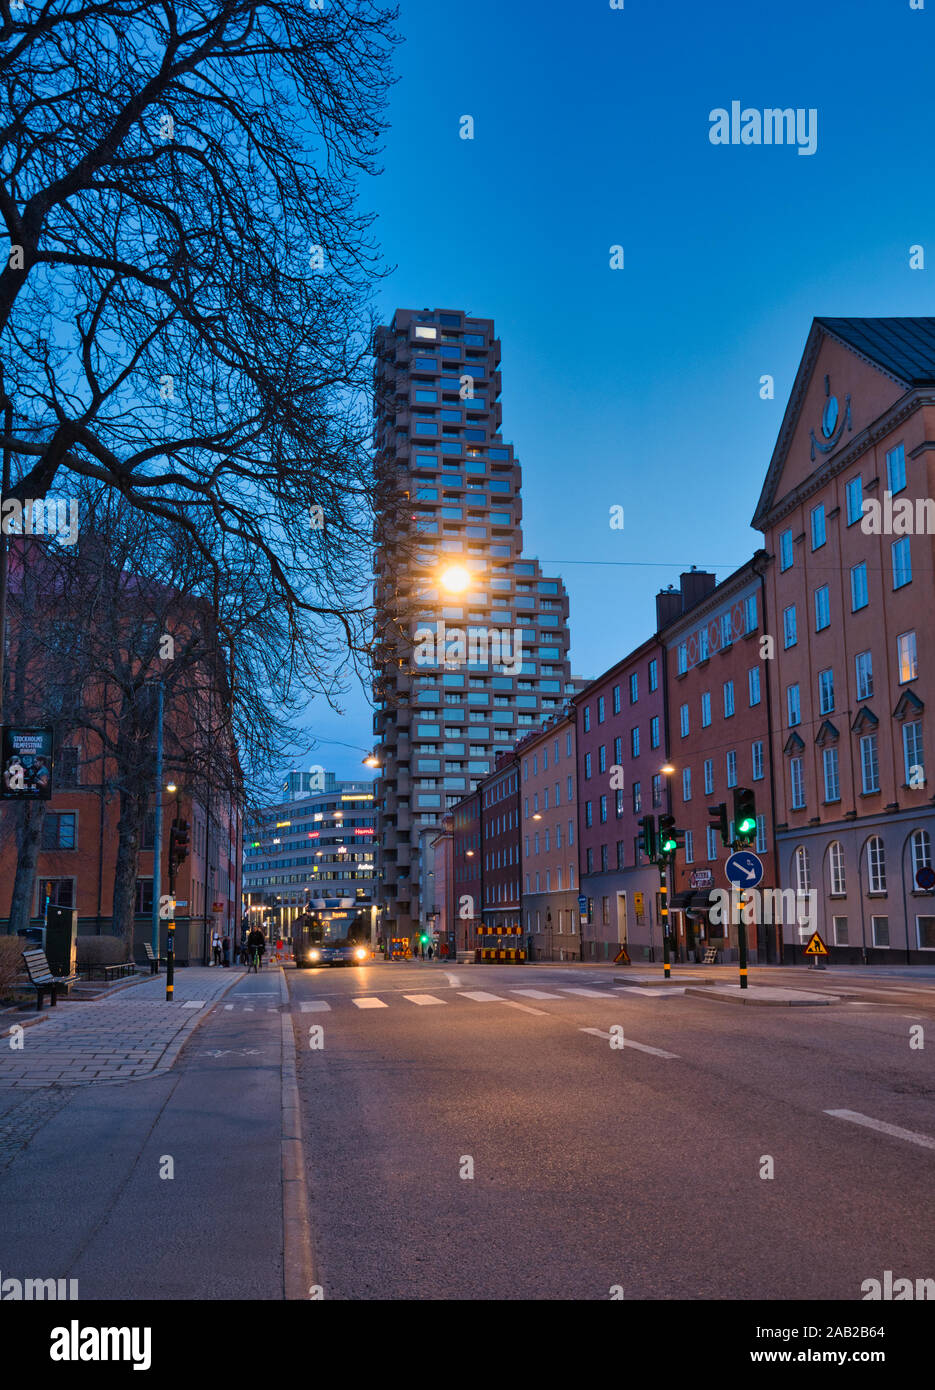 Norra Tornen grattacielo residenziale all'alba, Vasastaden, Norrmalm, Stoccolma, Svezia Foto Stock